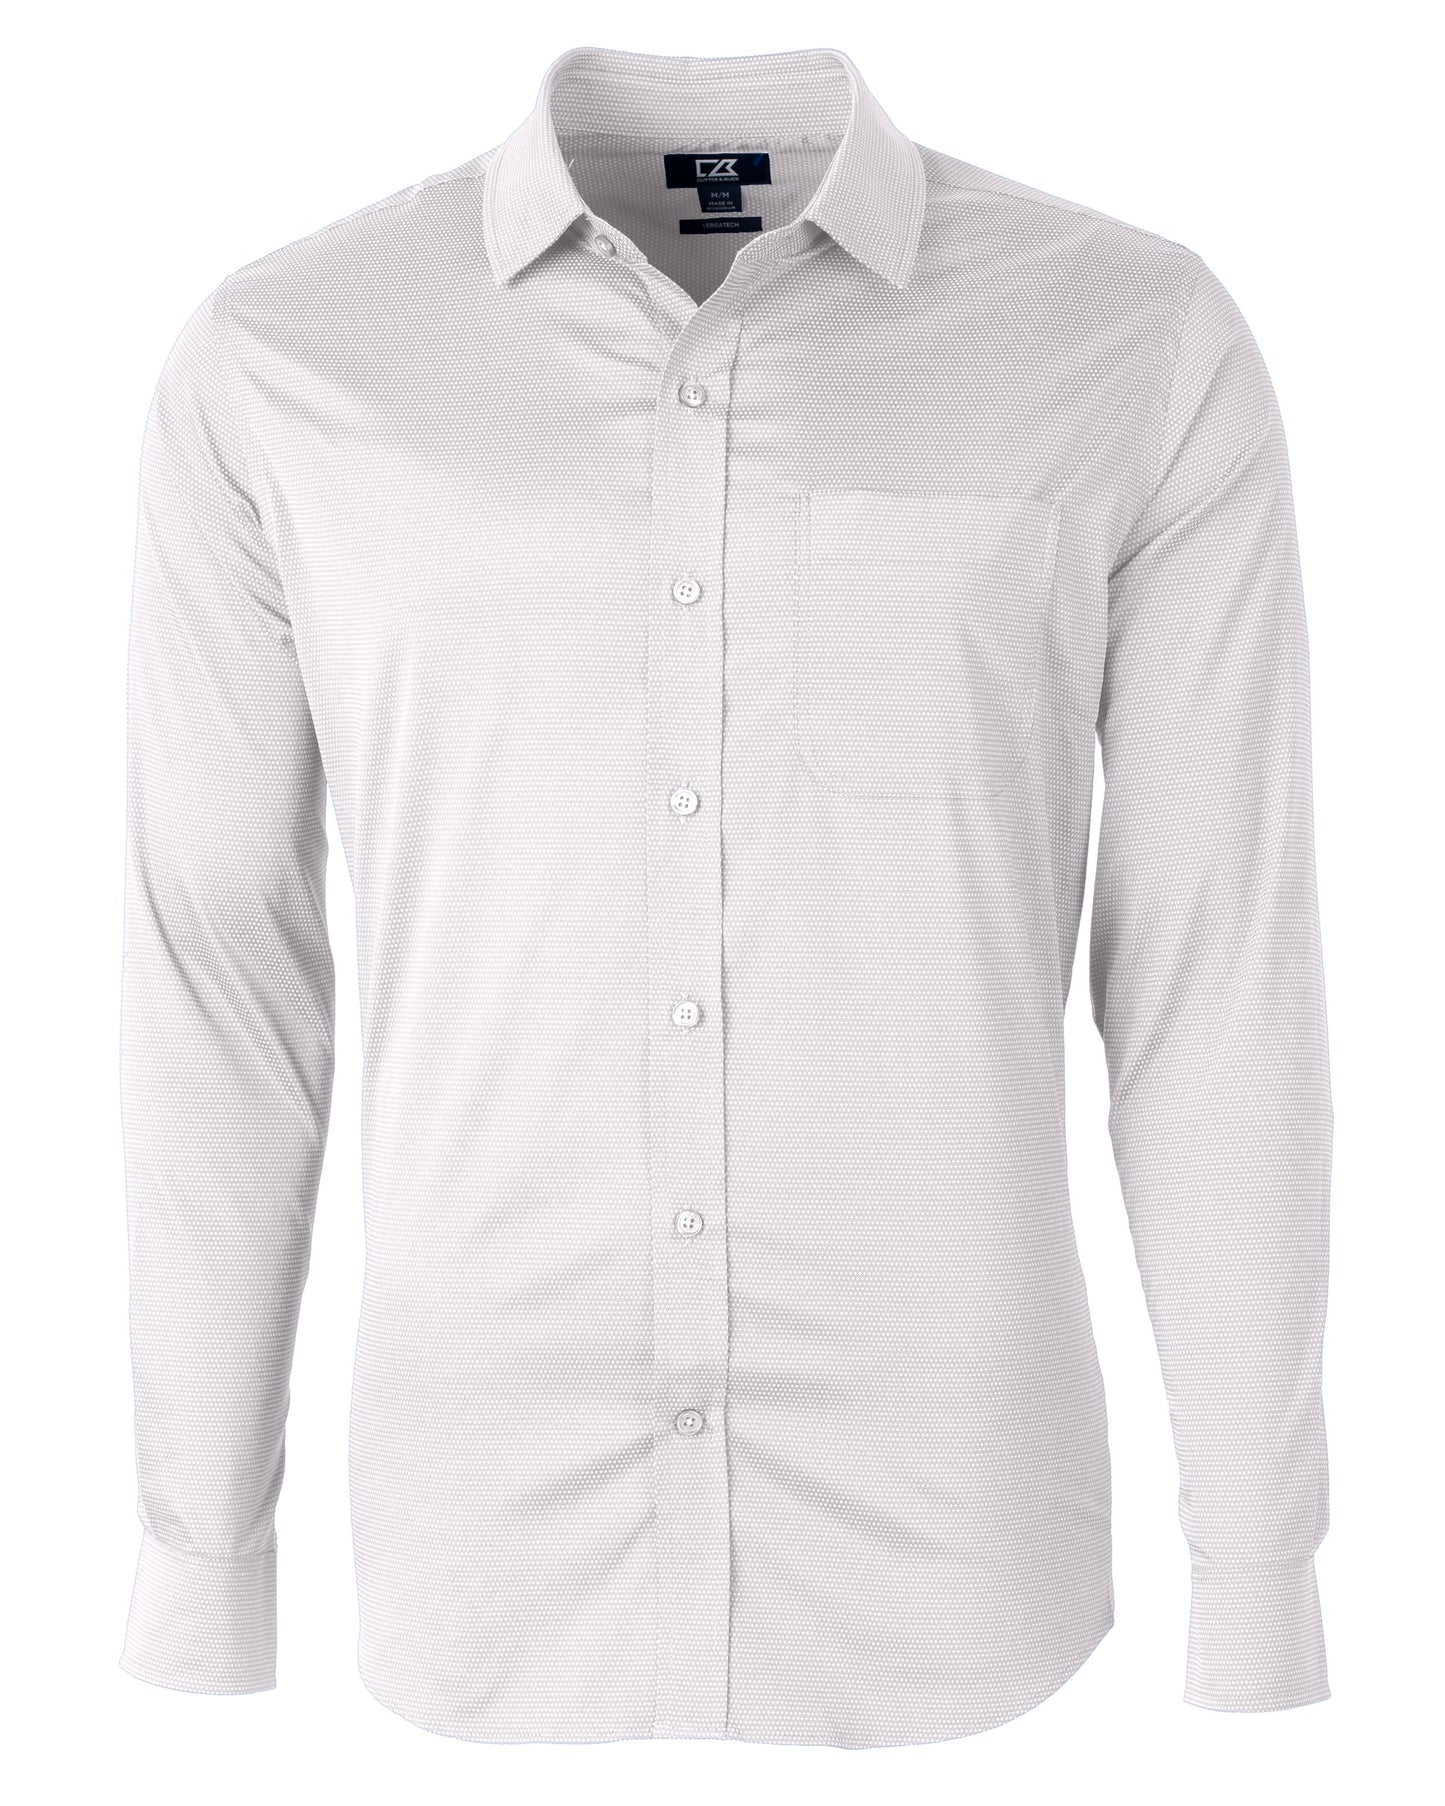 Cutter & Buck Versatech Geo Dobby Stretch Dress Shirt White/Black